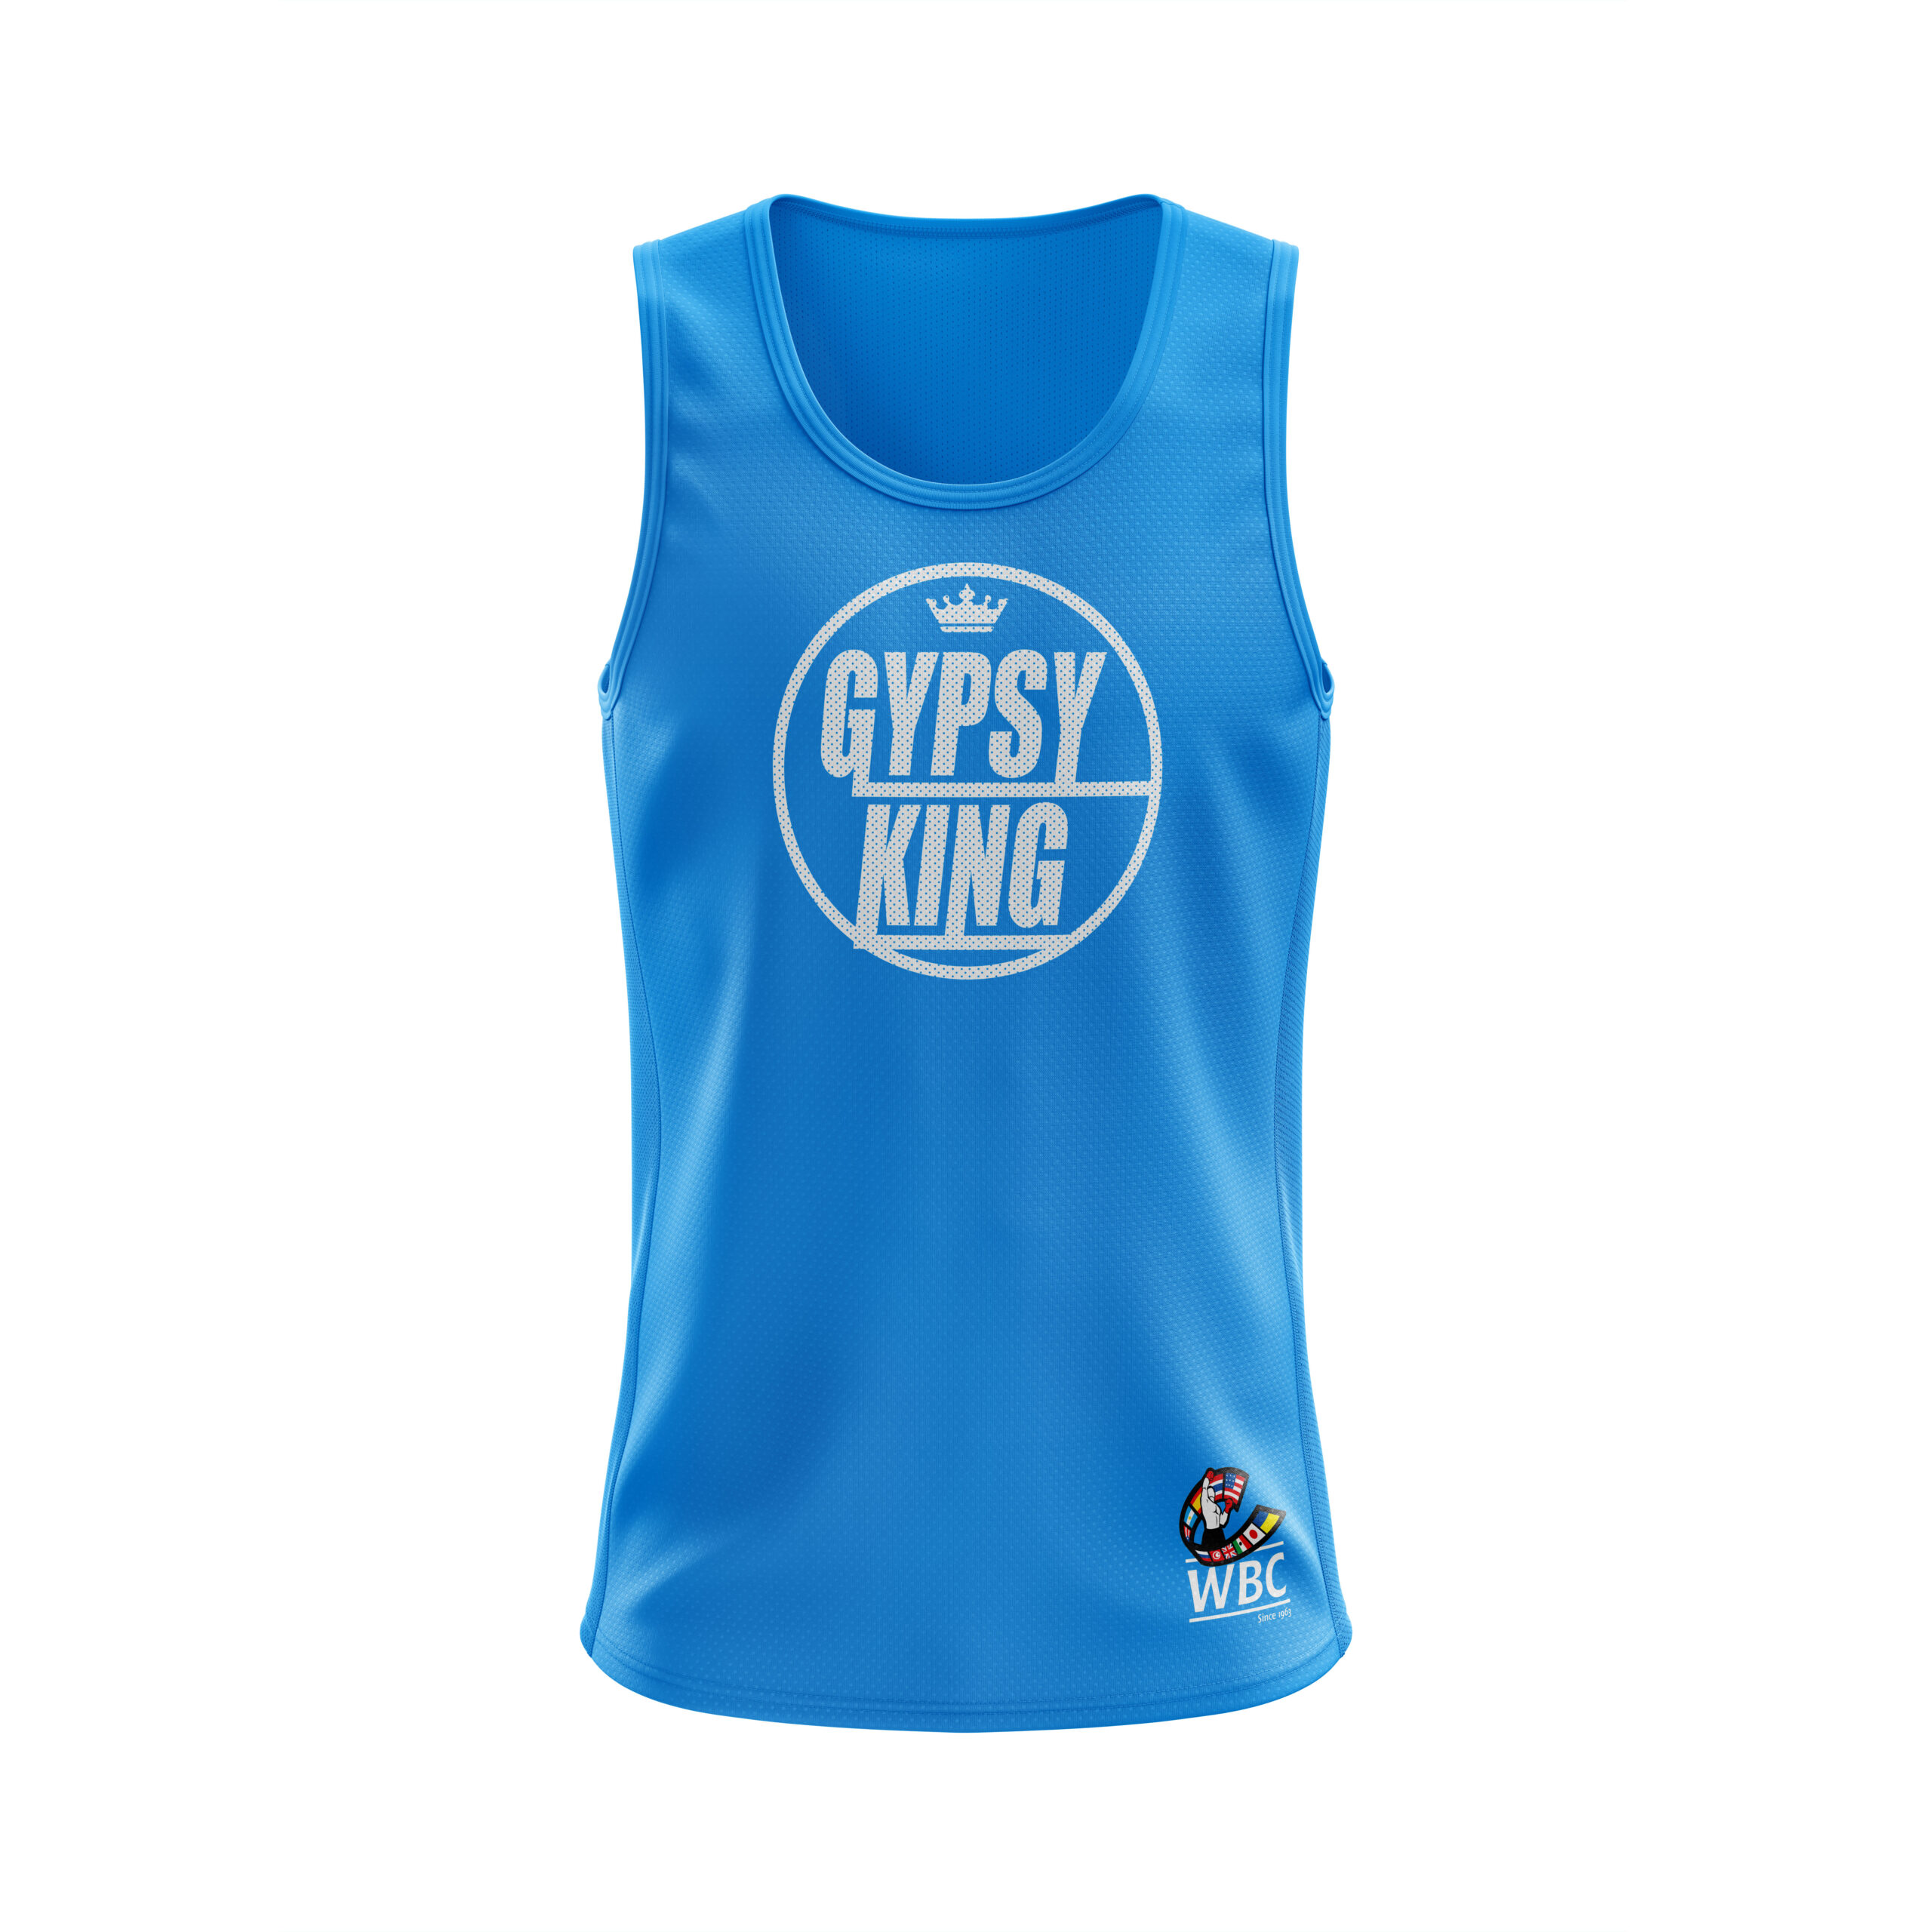 Light Blue and White Vest Top - Tyson Fury Official Merchandise